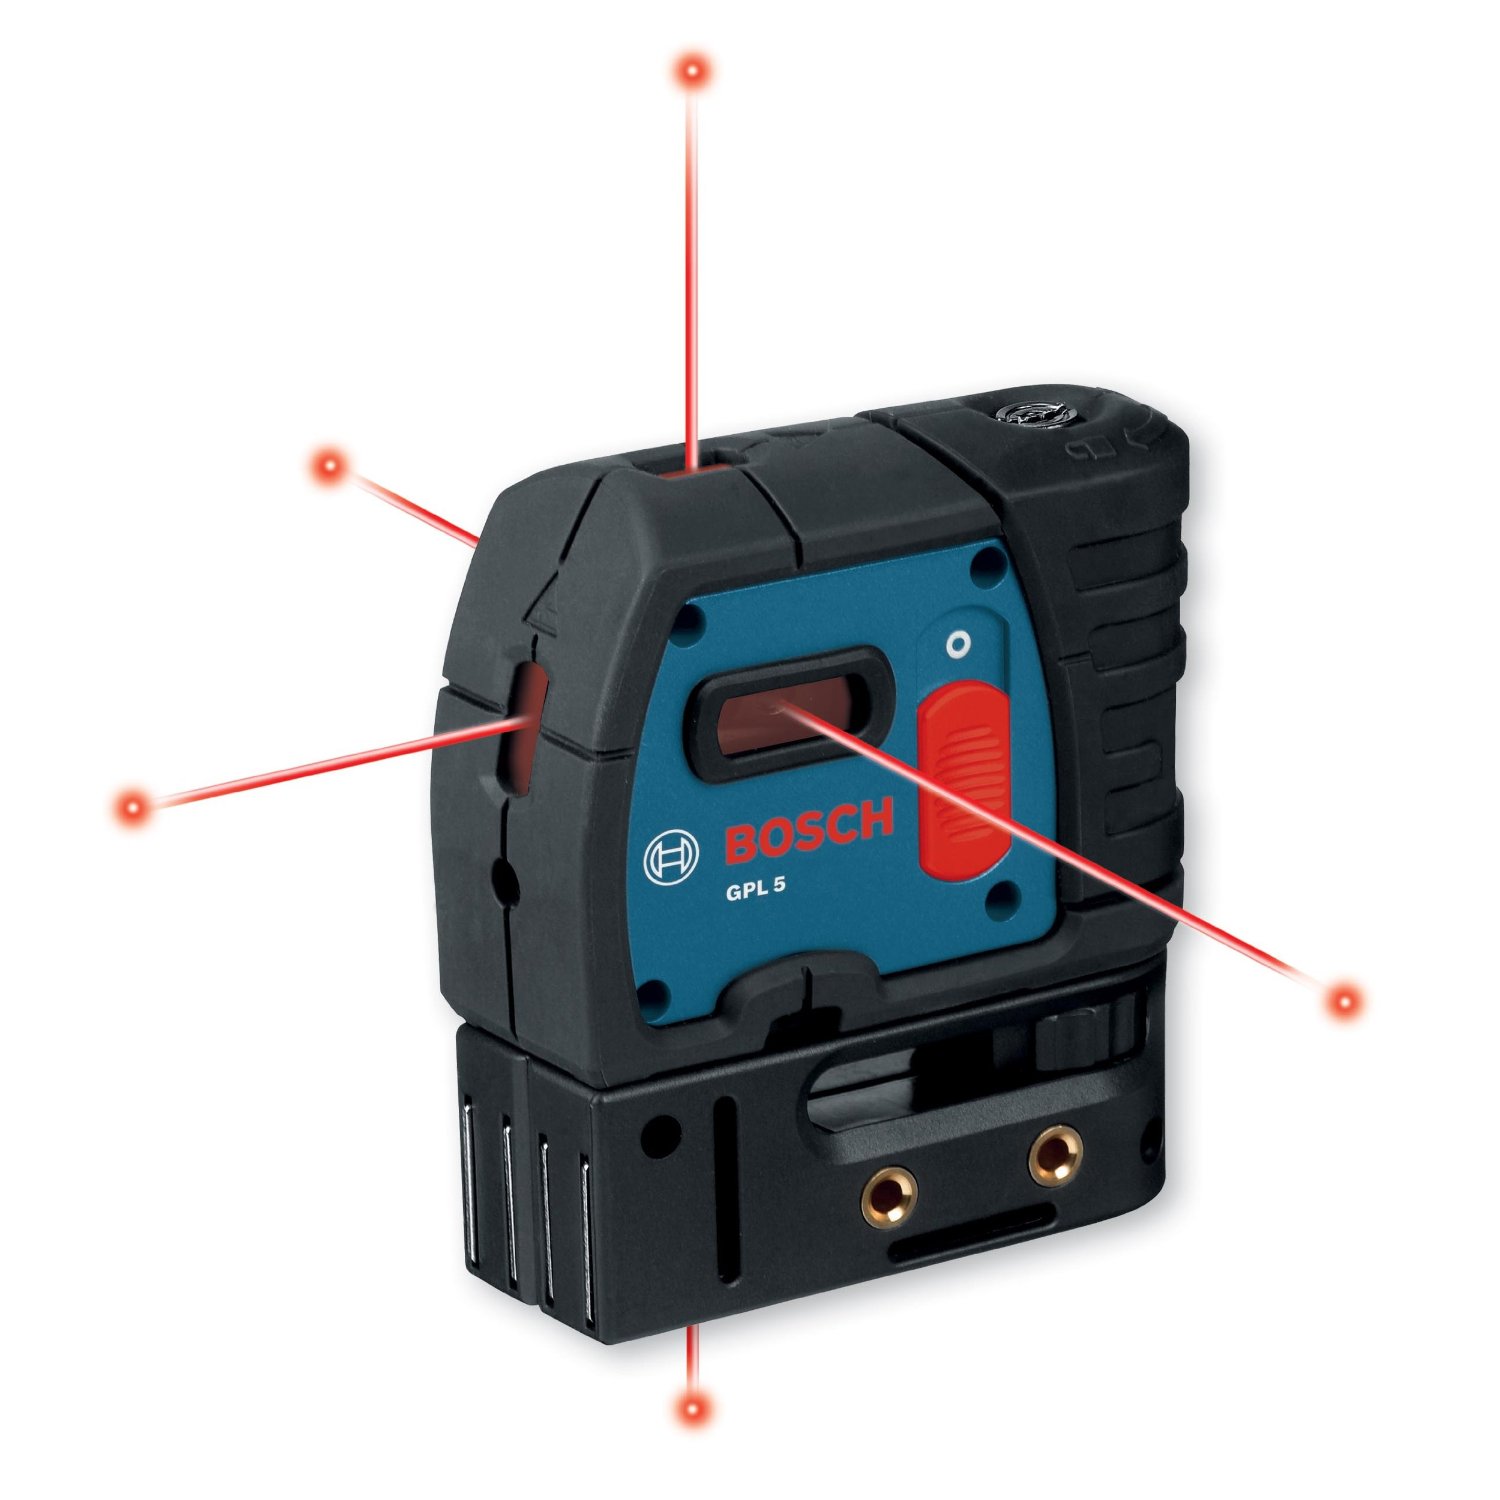 Bosch GPL5 5-Point Self-Leveling Laser